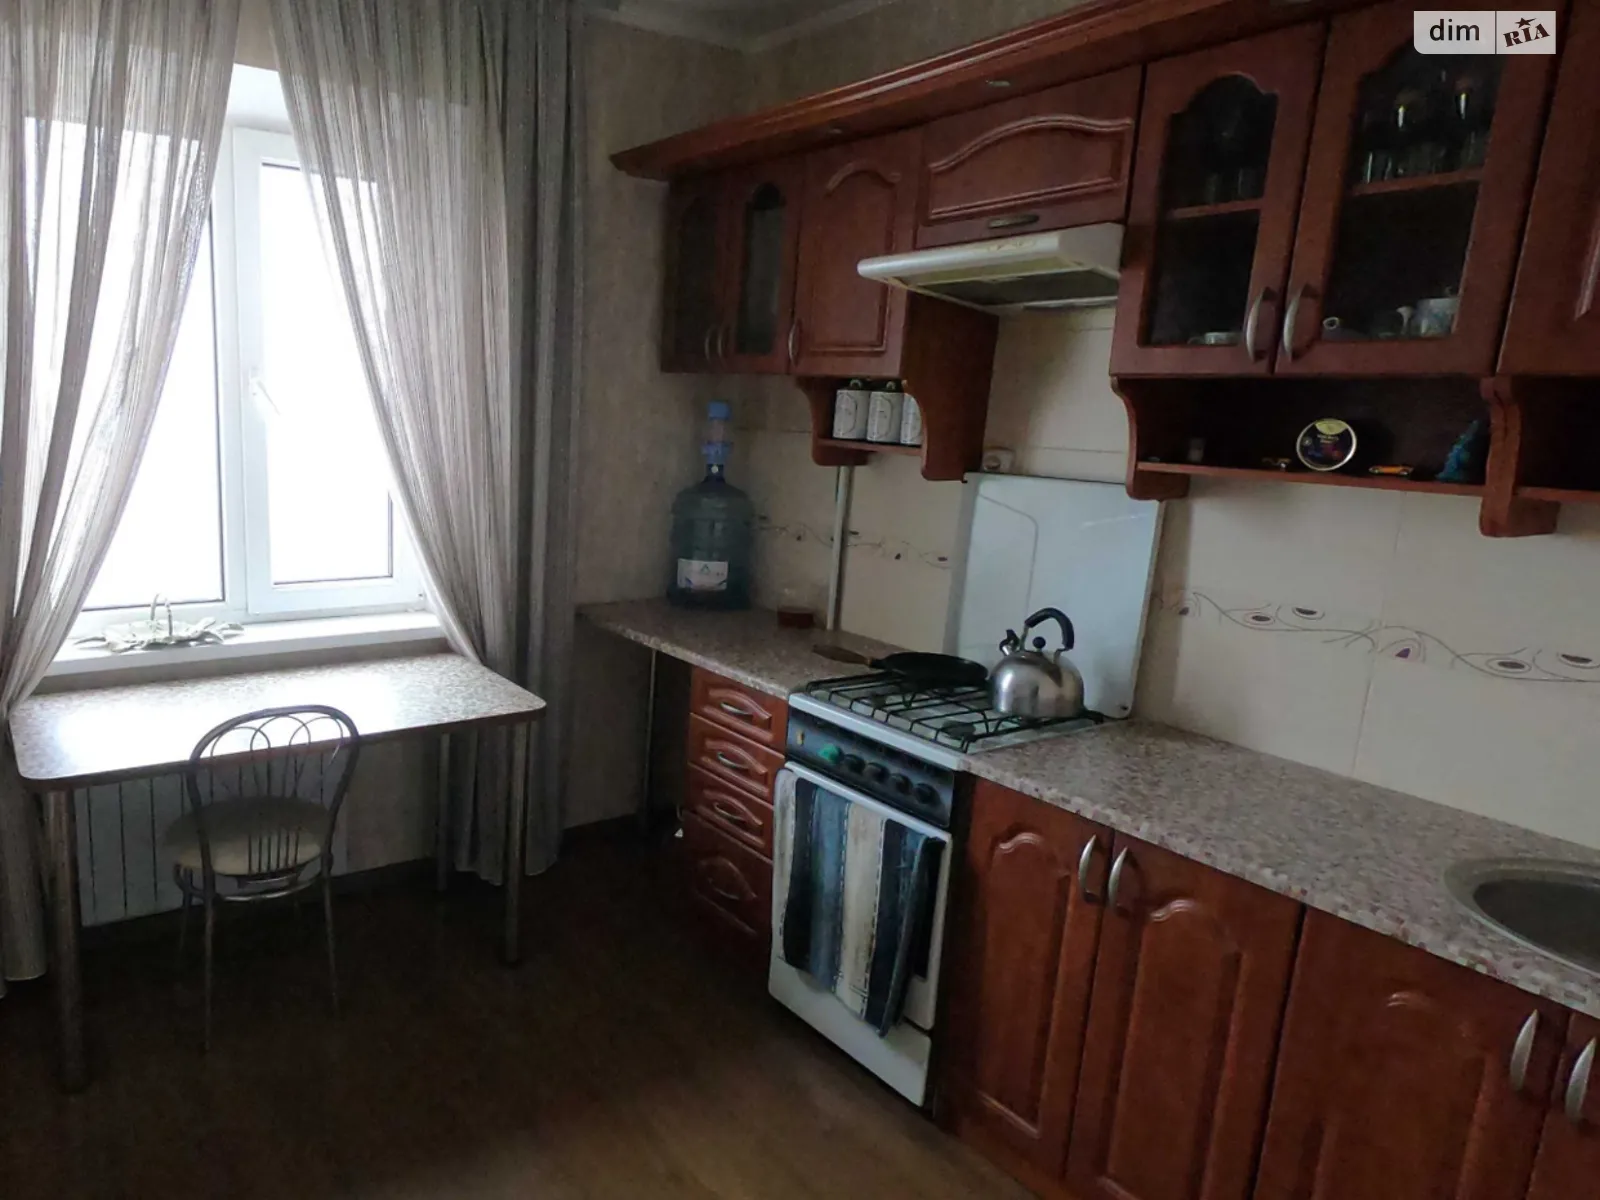 Сдается в аренду 1-комнатная квартира 35 кв. м в Ровно - фото 1